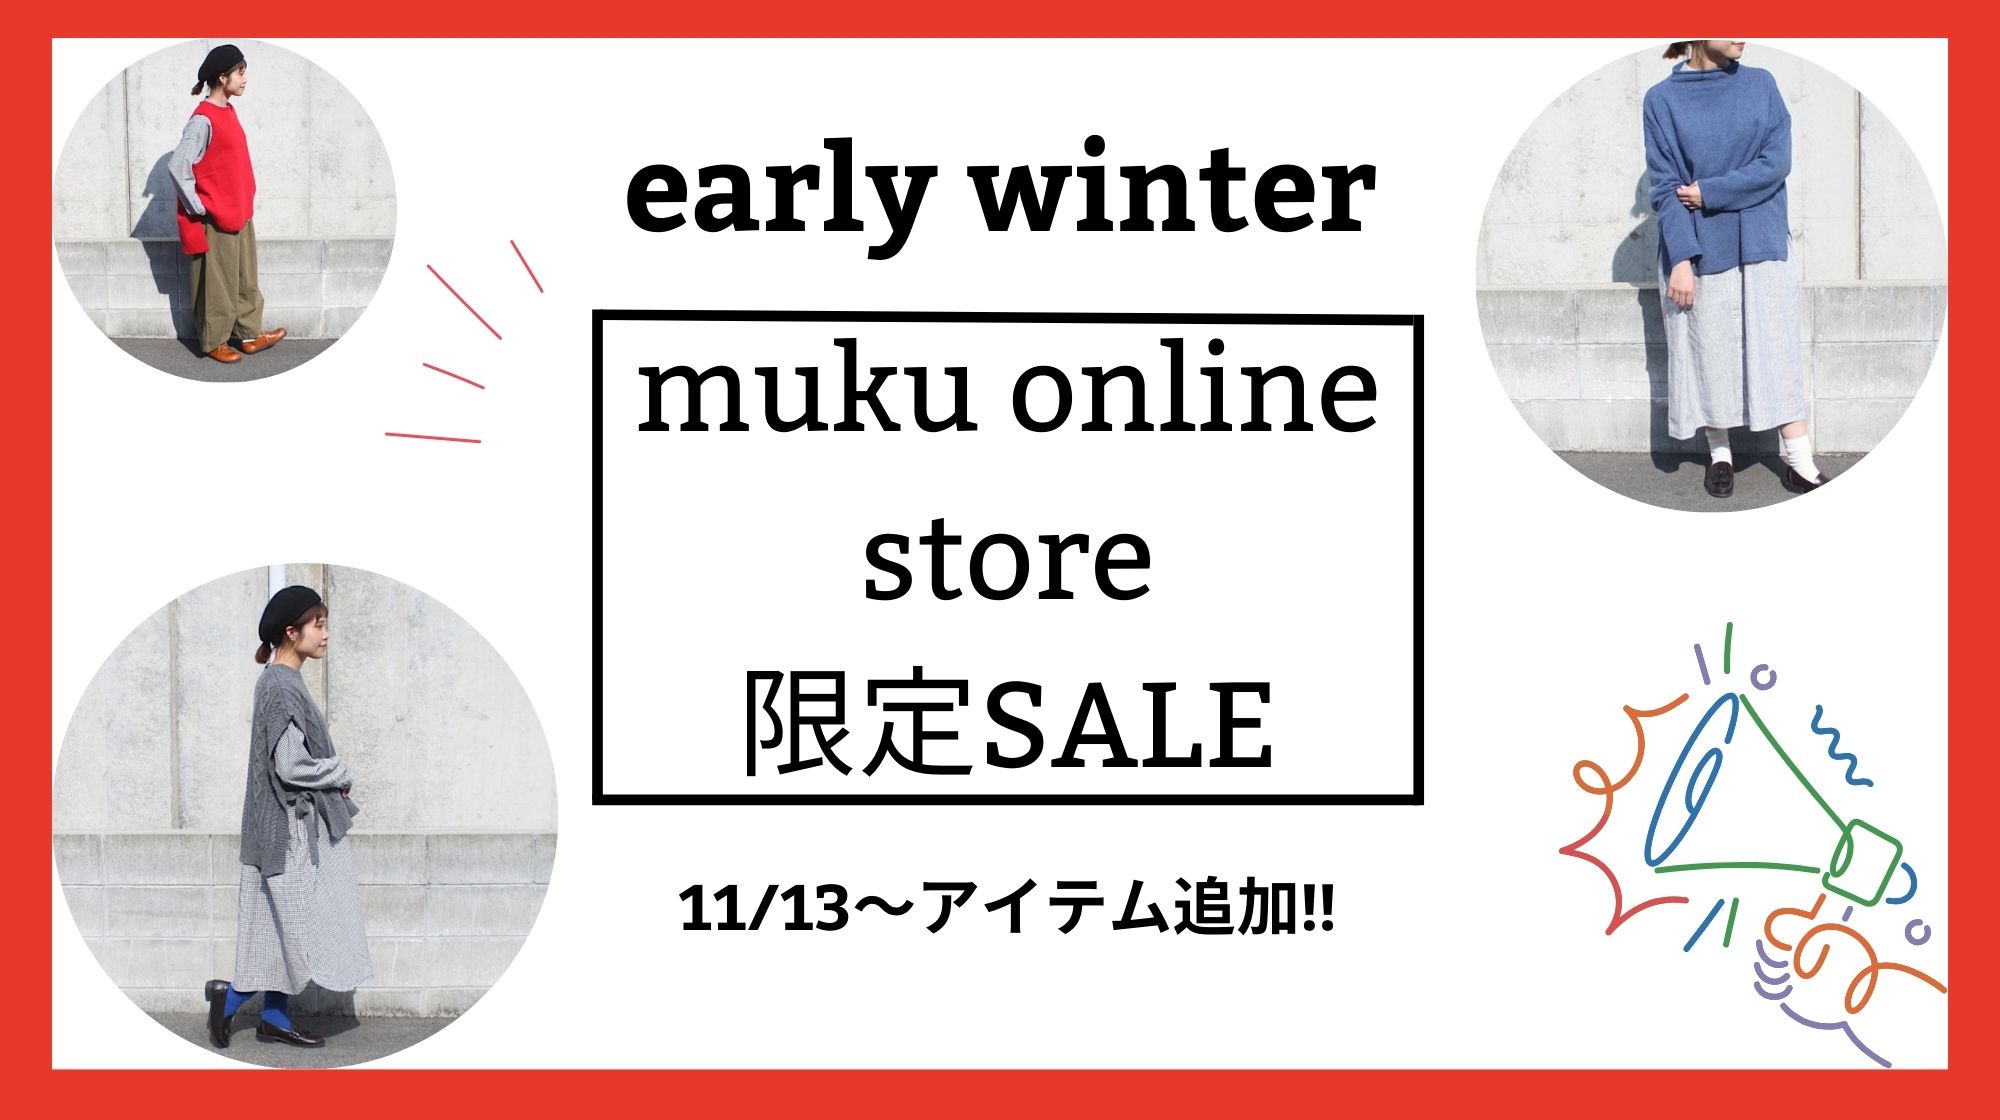 muku online store 限定SALE🎉